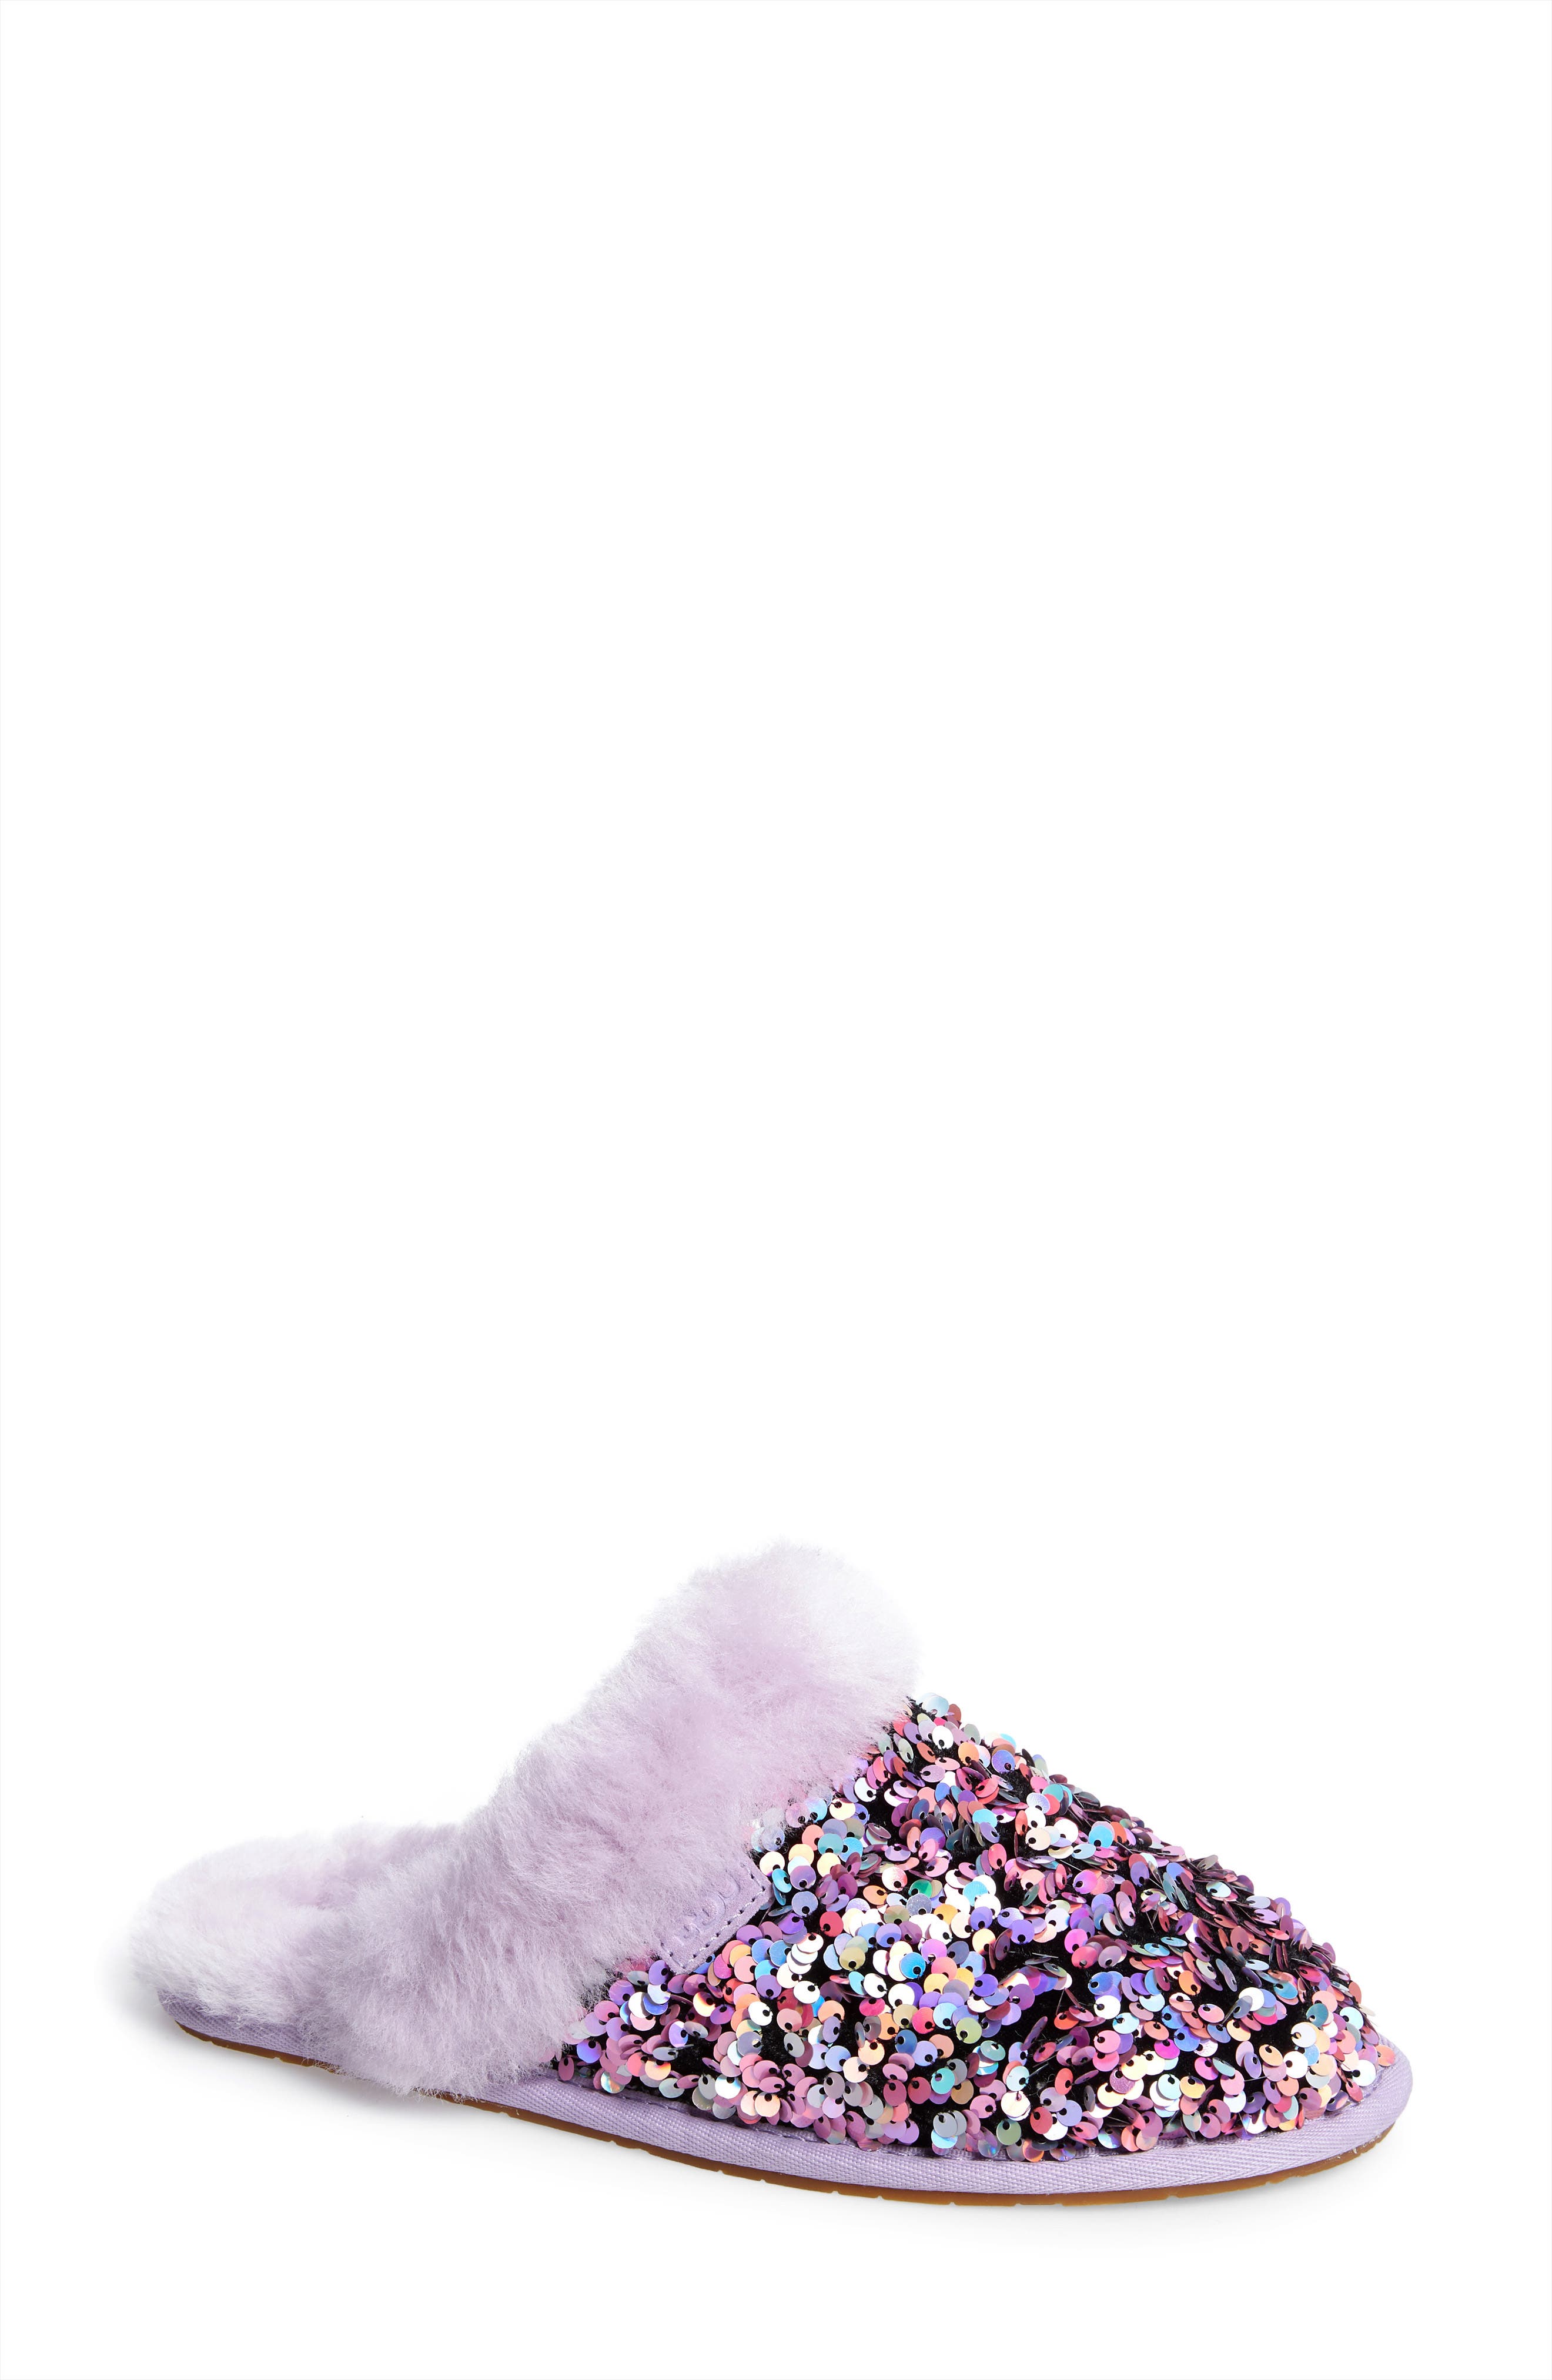 pink glitter ugg slippers